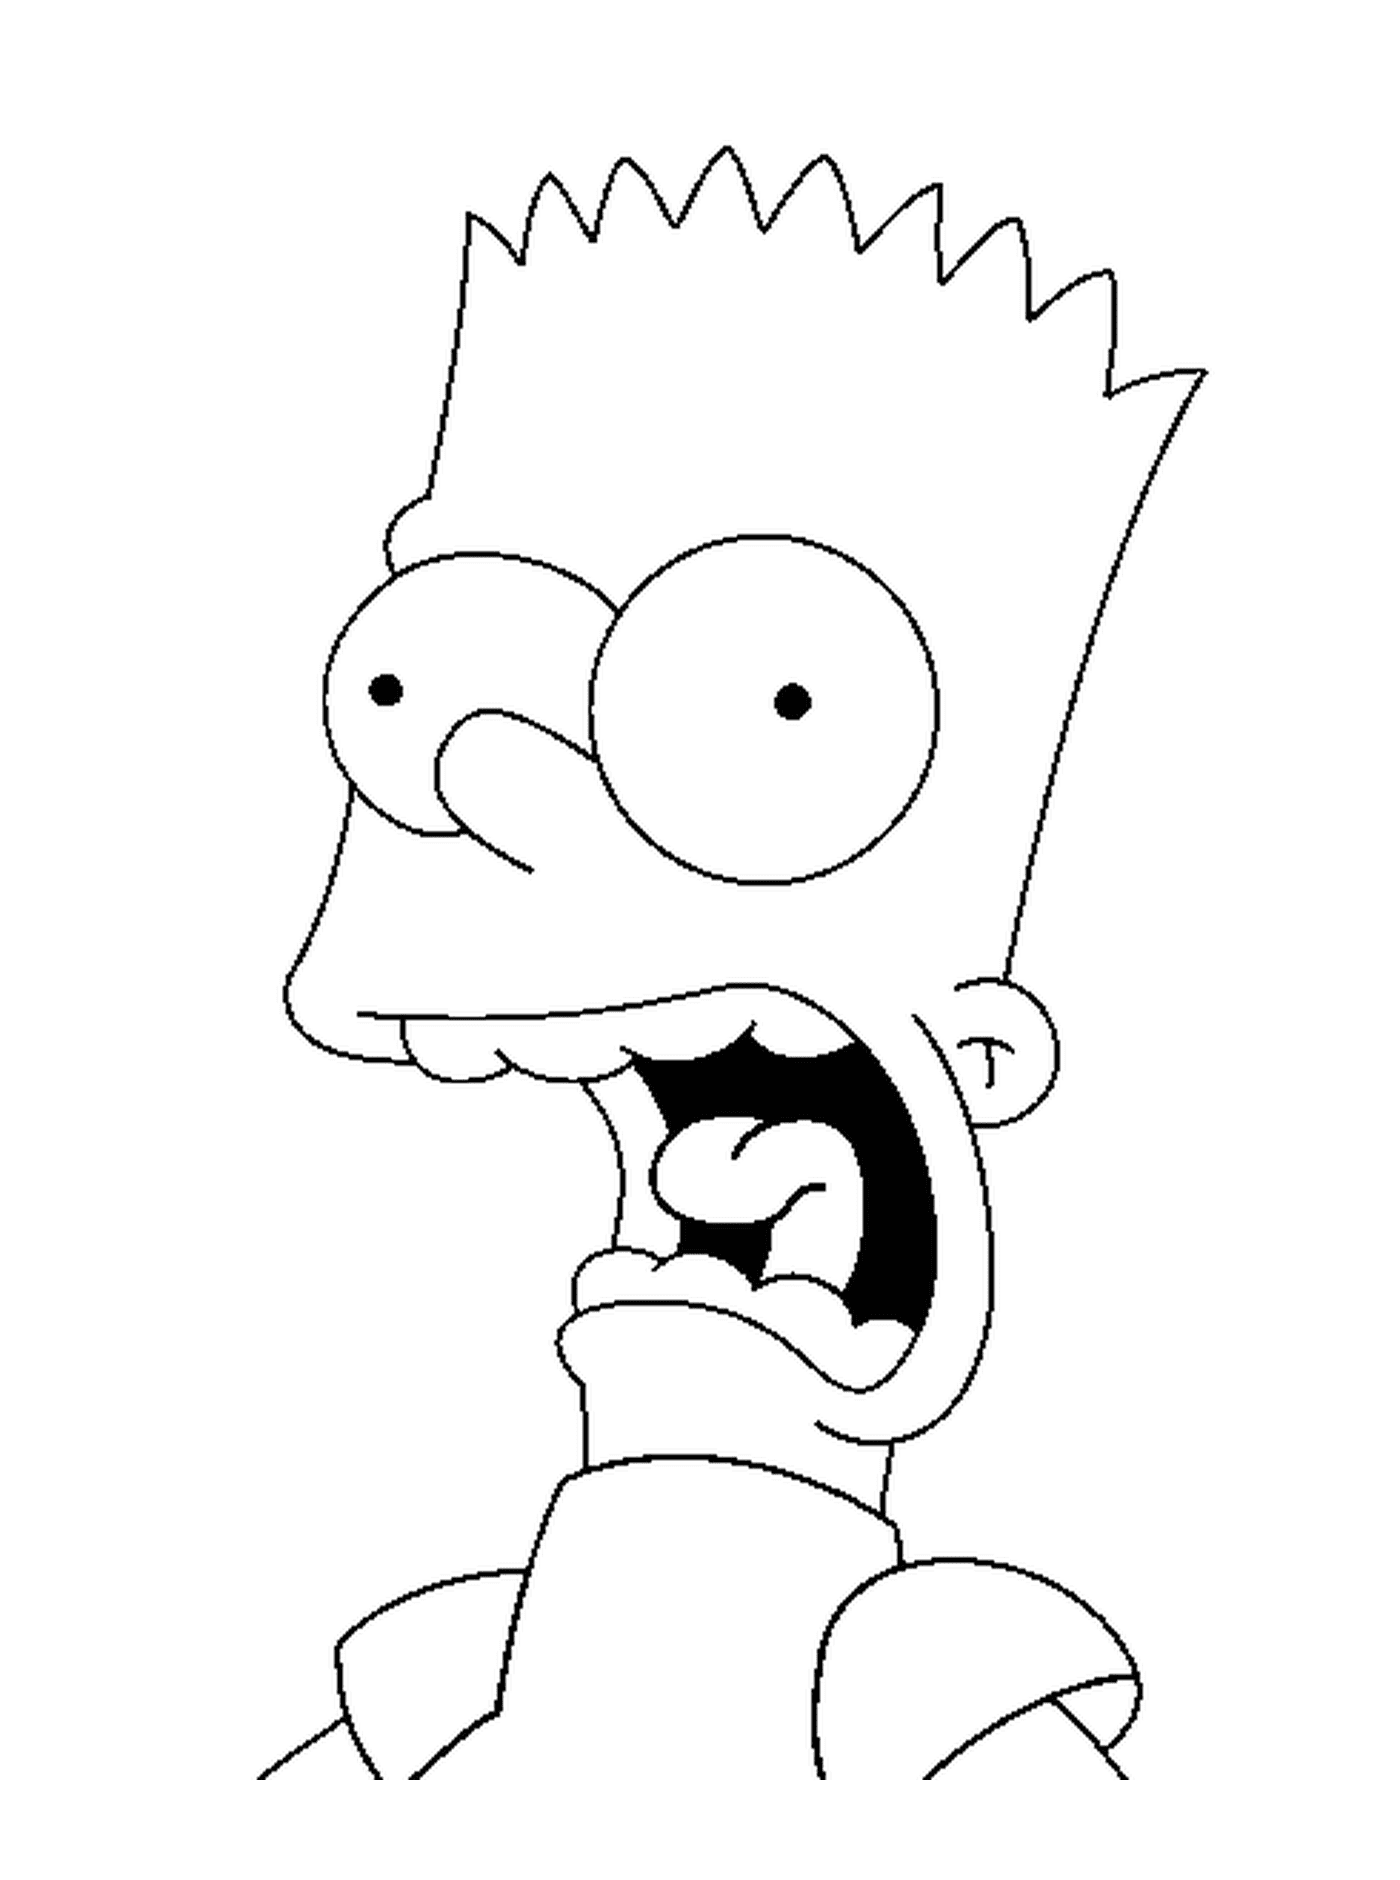  Bart urla con paura 